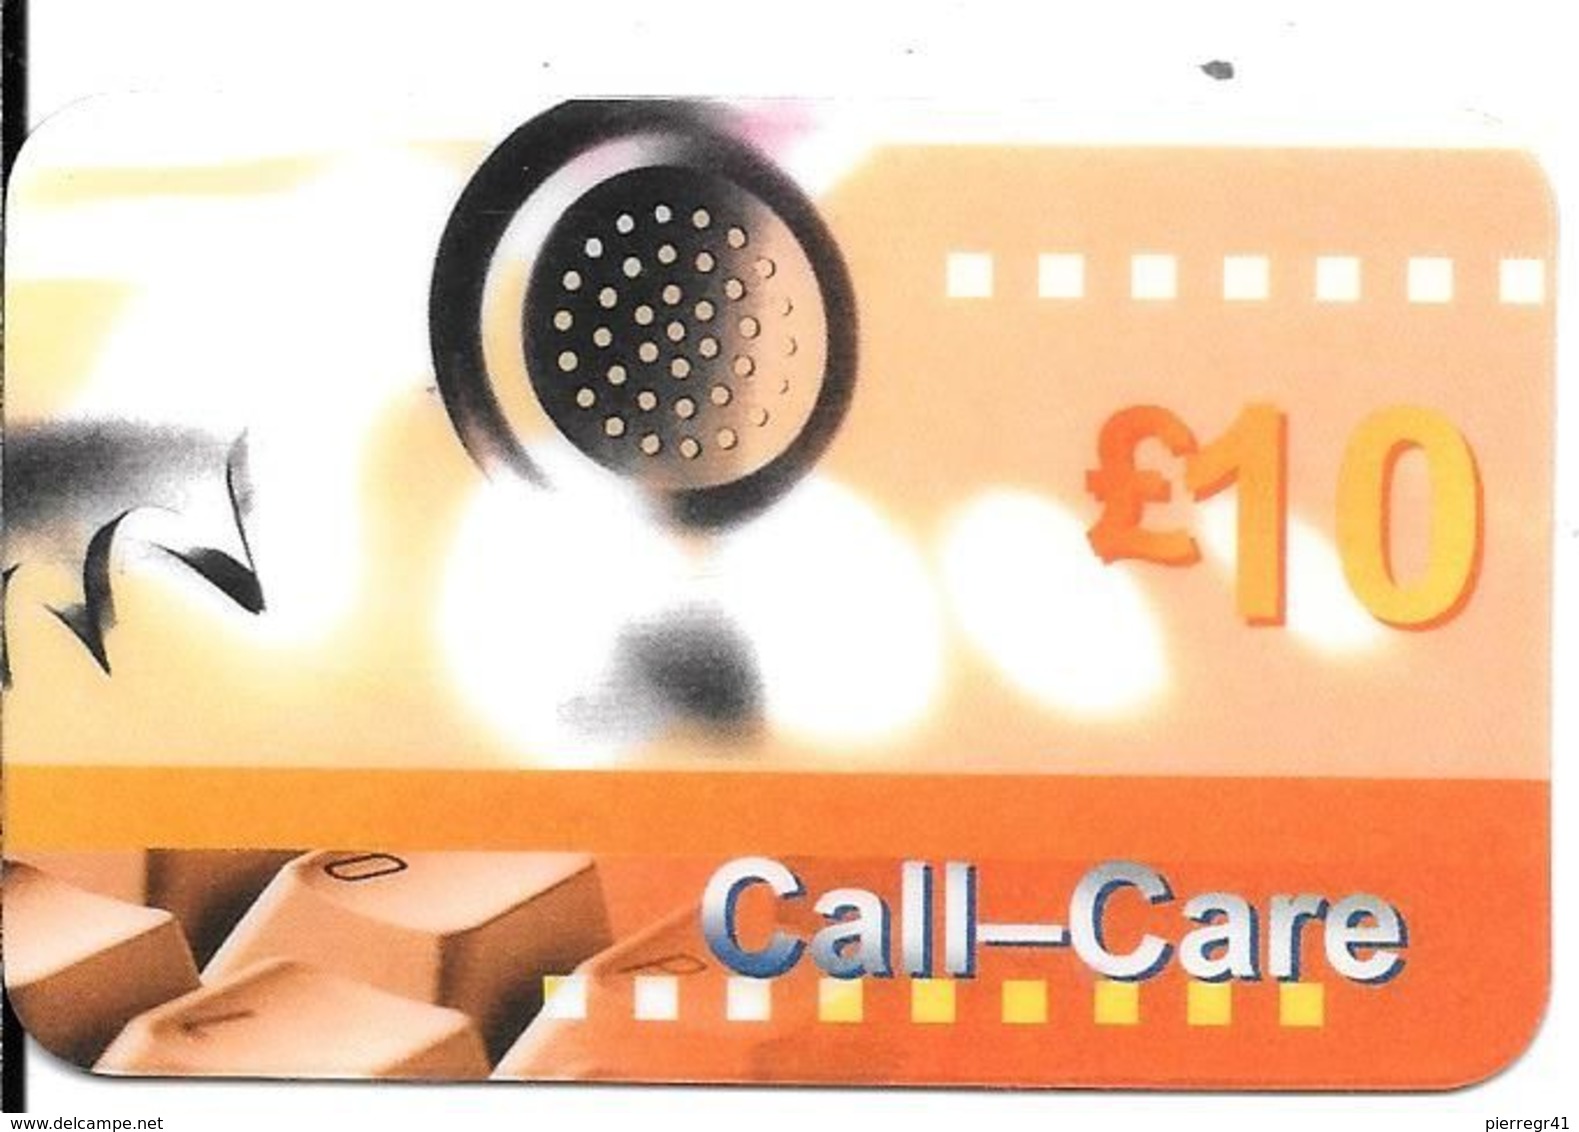 CARTE-PREPAYEE-GB-CALL-CARE-10£--Gratté-Plastic Fin Glacé-TBE-RARE - BT Global Cards (Prepaid)